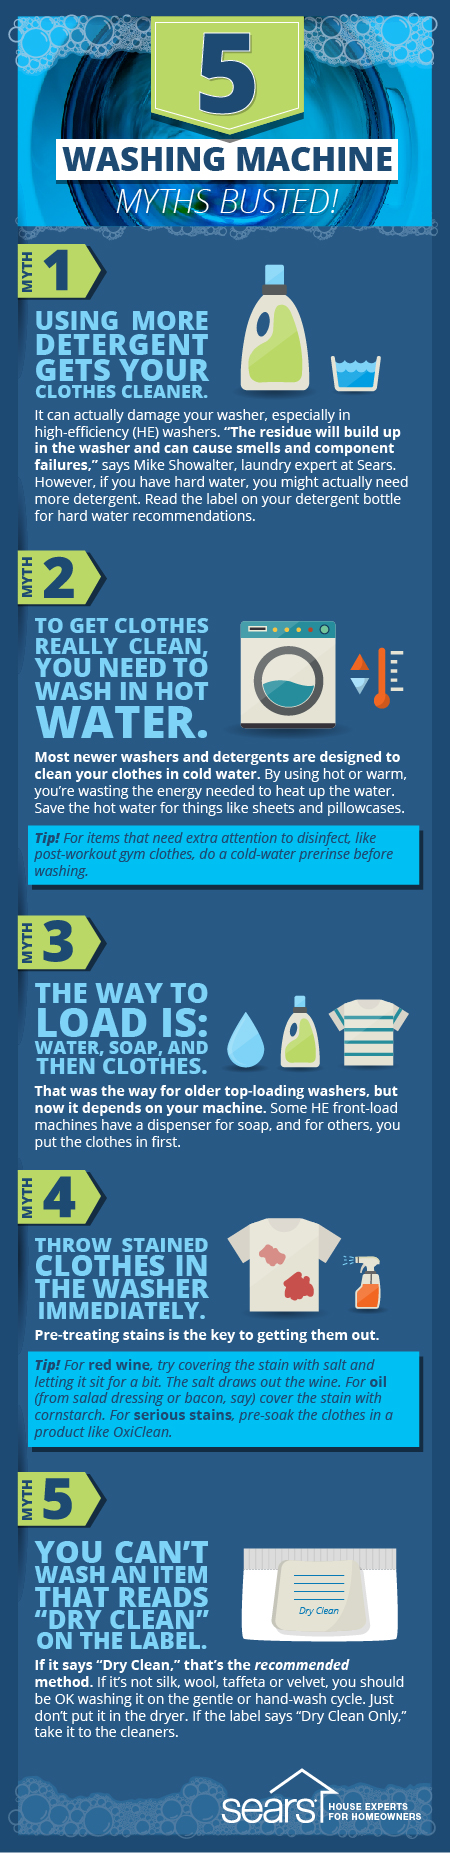 5 Washing Machine Myths